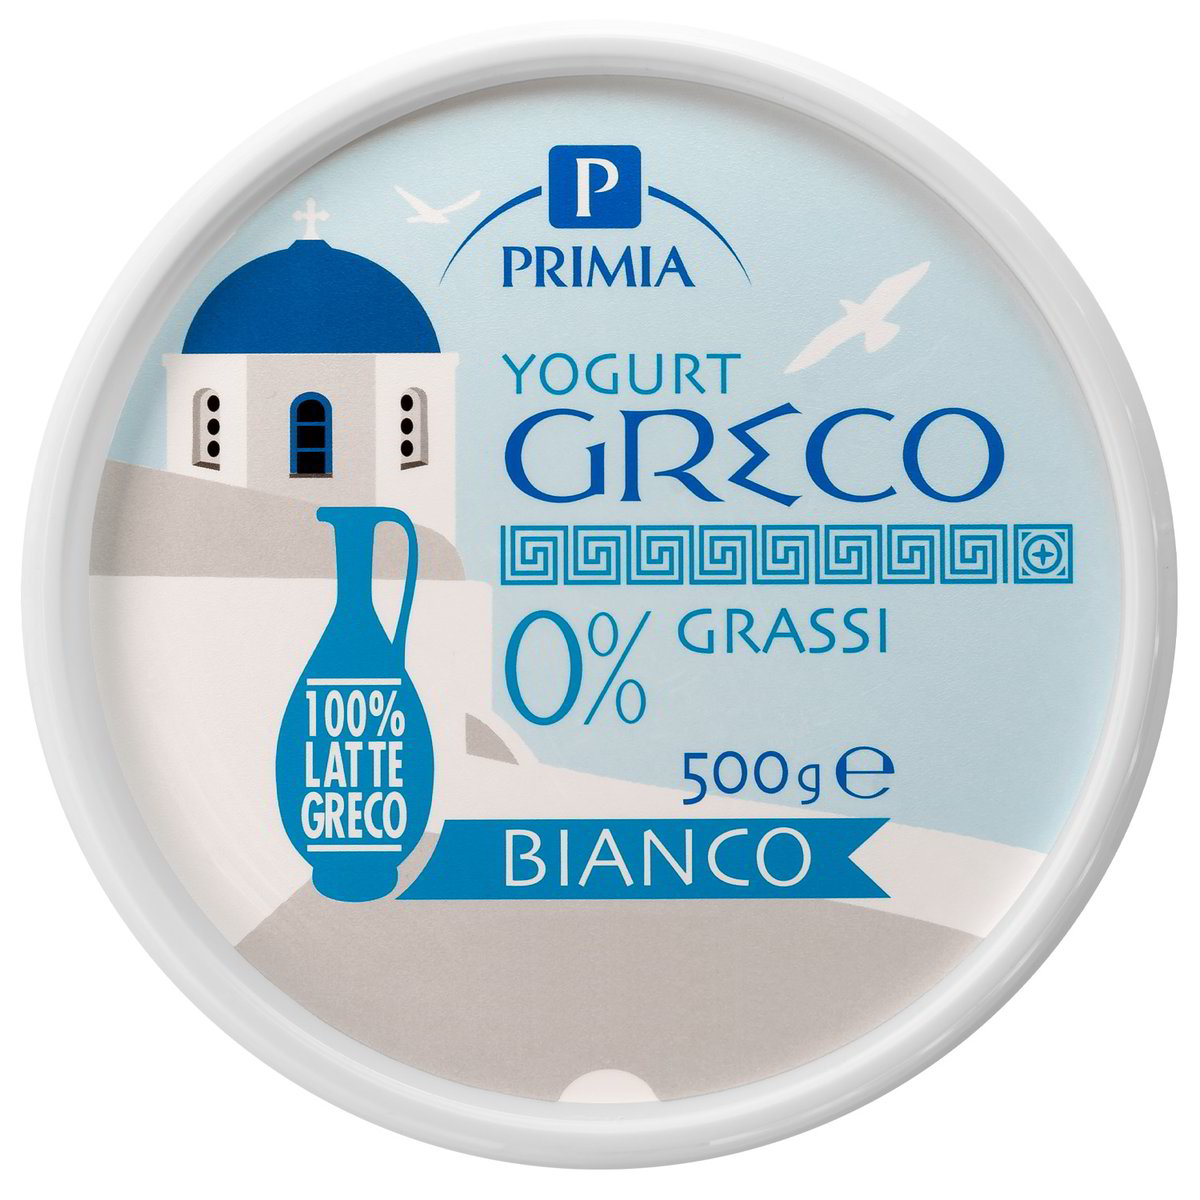 YOGURT GRECO BIANCO 0% GRASSI PRIMIA - DupliClick